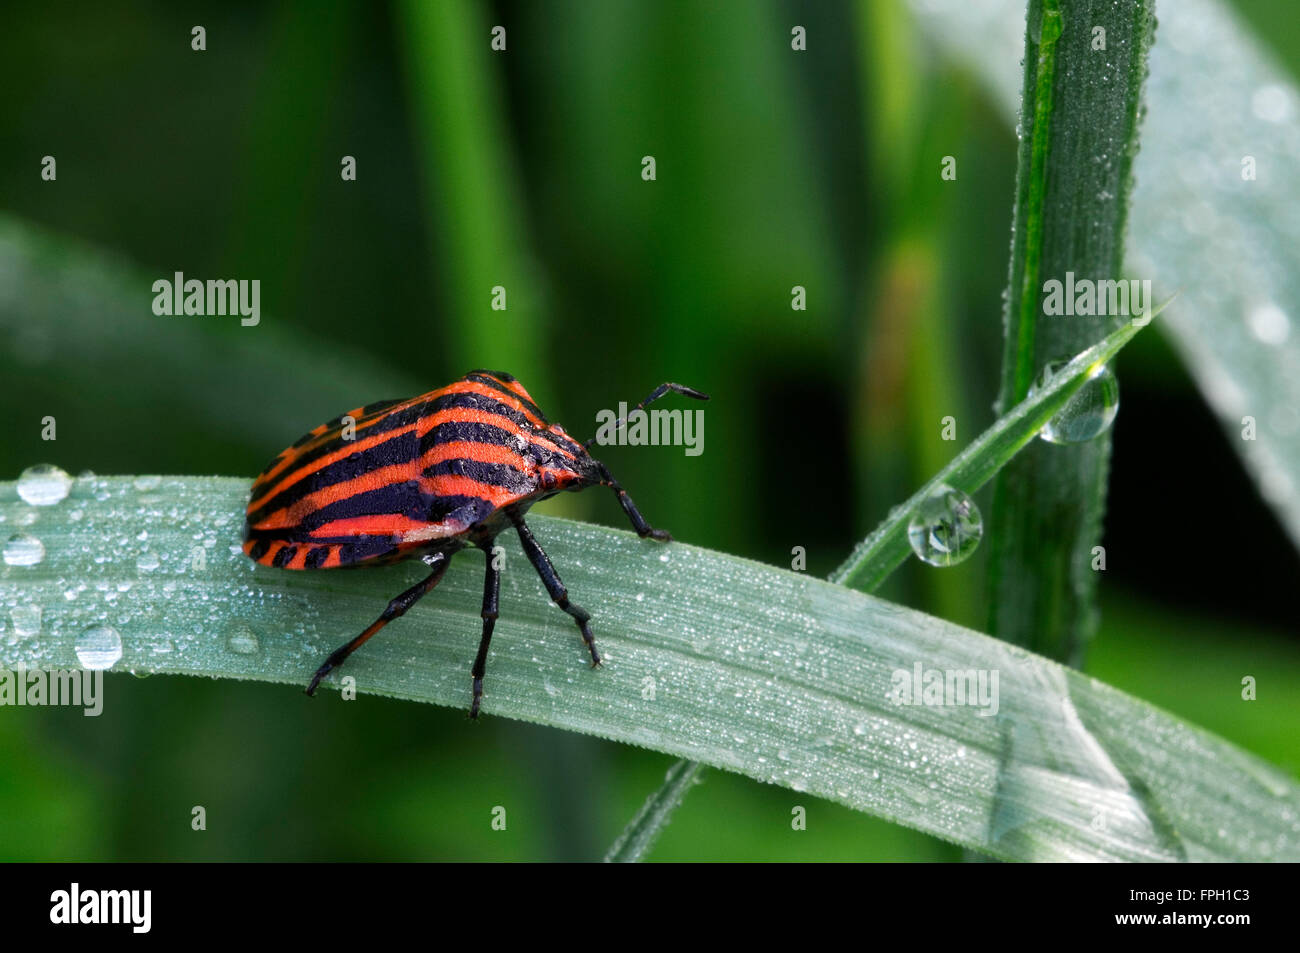 Striping italiano-bug / menestrello bug / Harlequin bug (Graphosoma lineatum / Graphosoma italicum) nella prateria Foto Stock